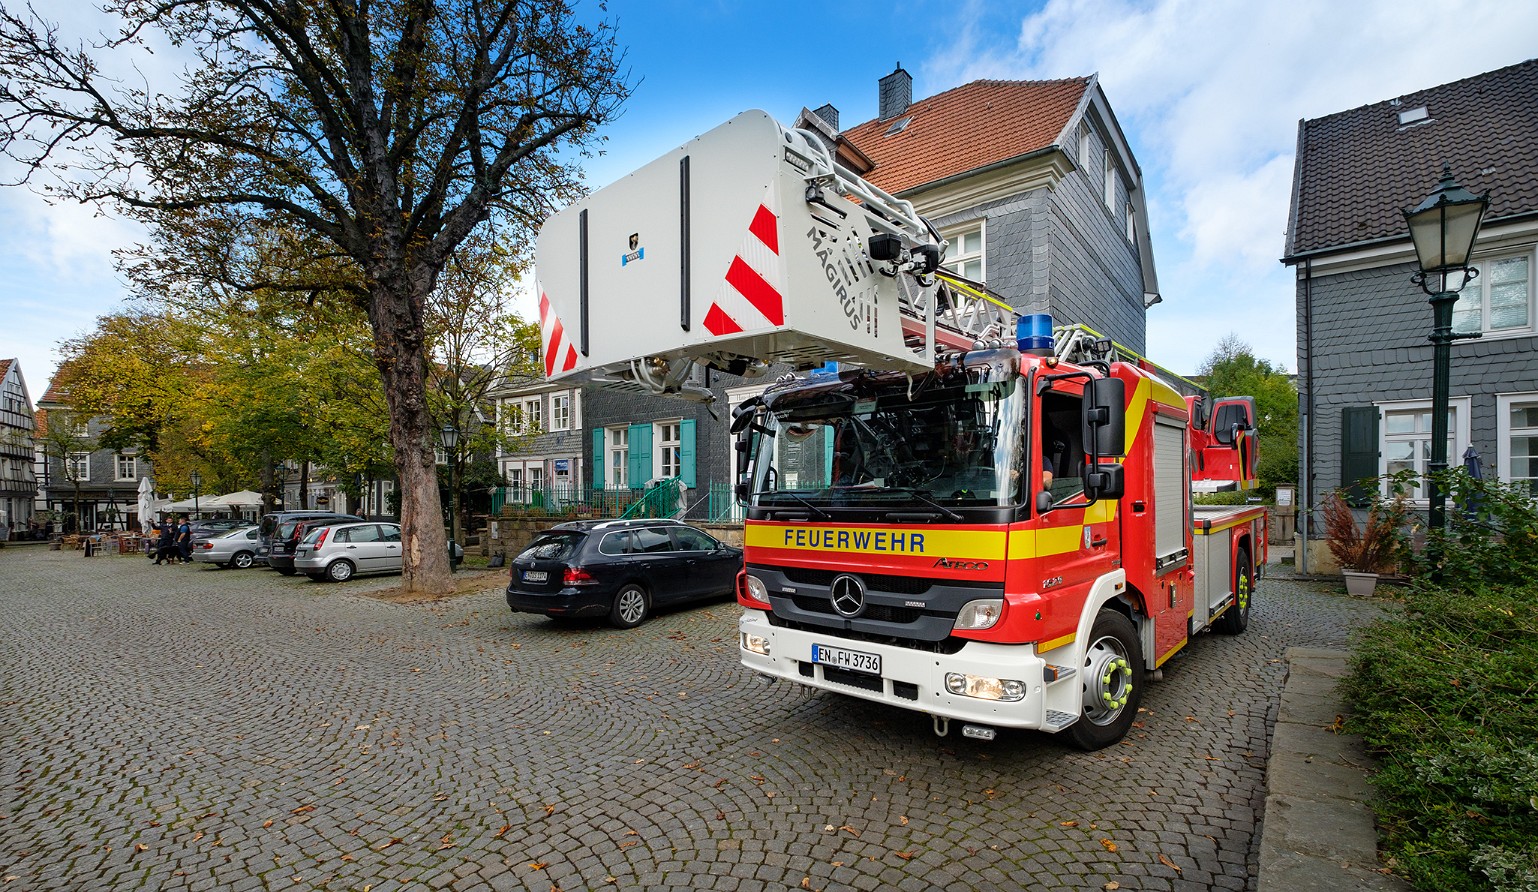 Kirchplatz_008_Feuerwehr-Hattingen_X-T2_10mm_-6,4_1-320_LR69_sRGB